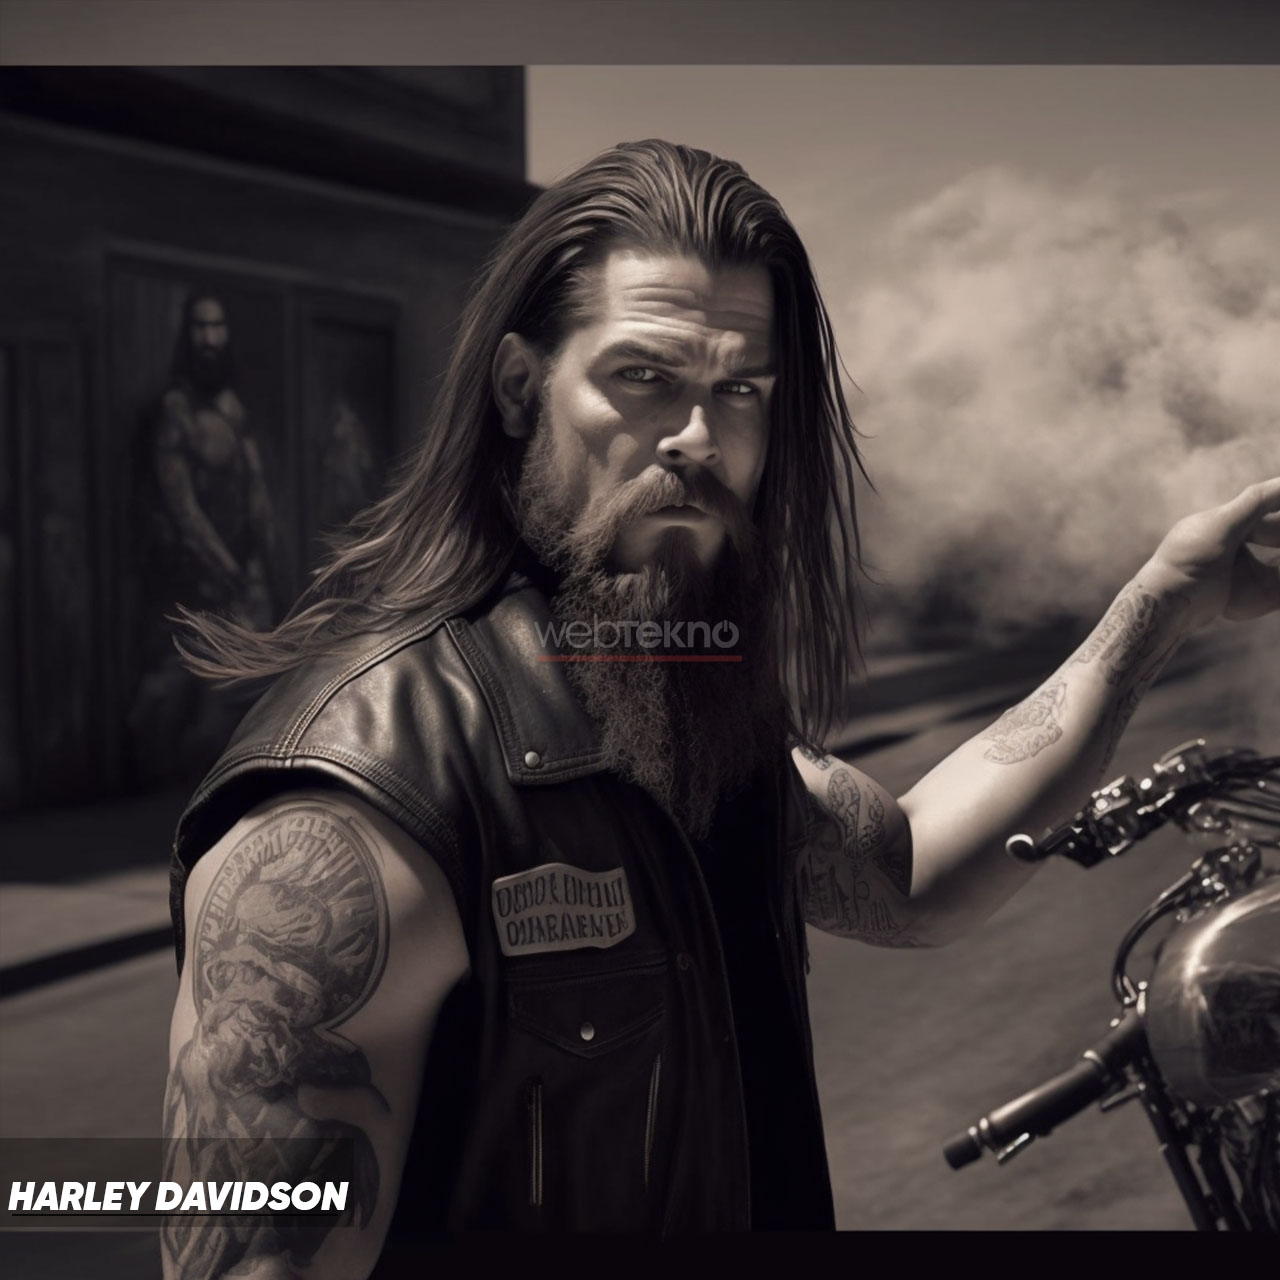 If Harley Davidson were human